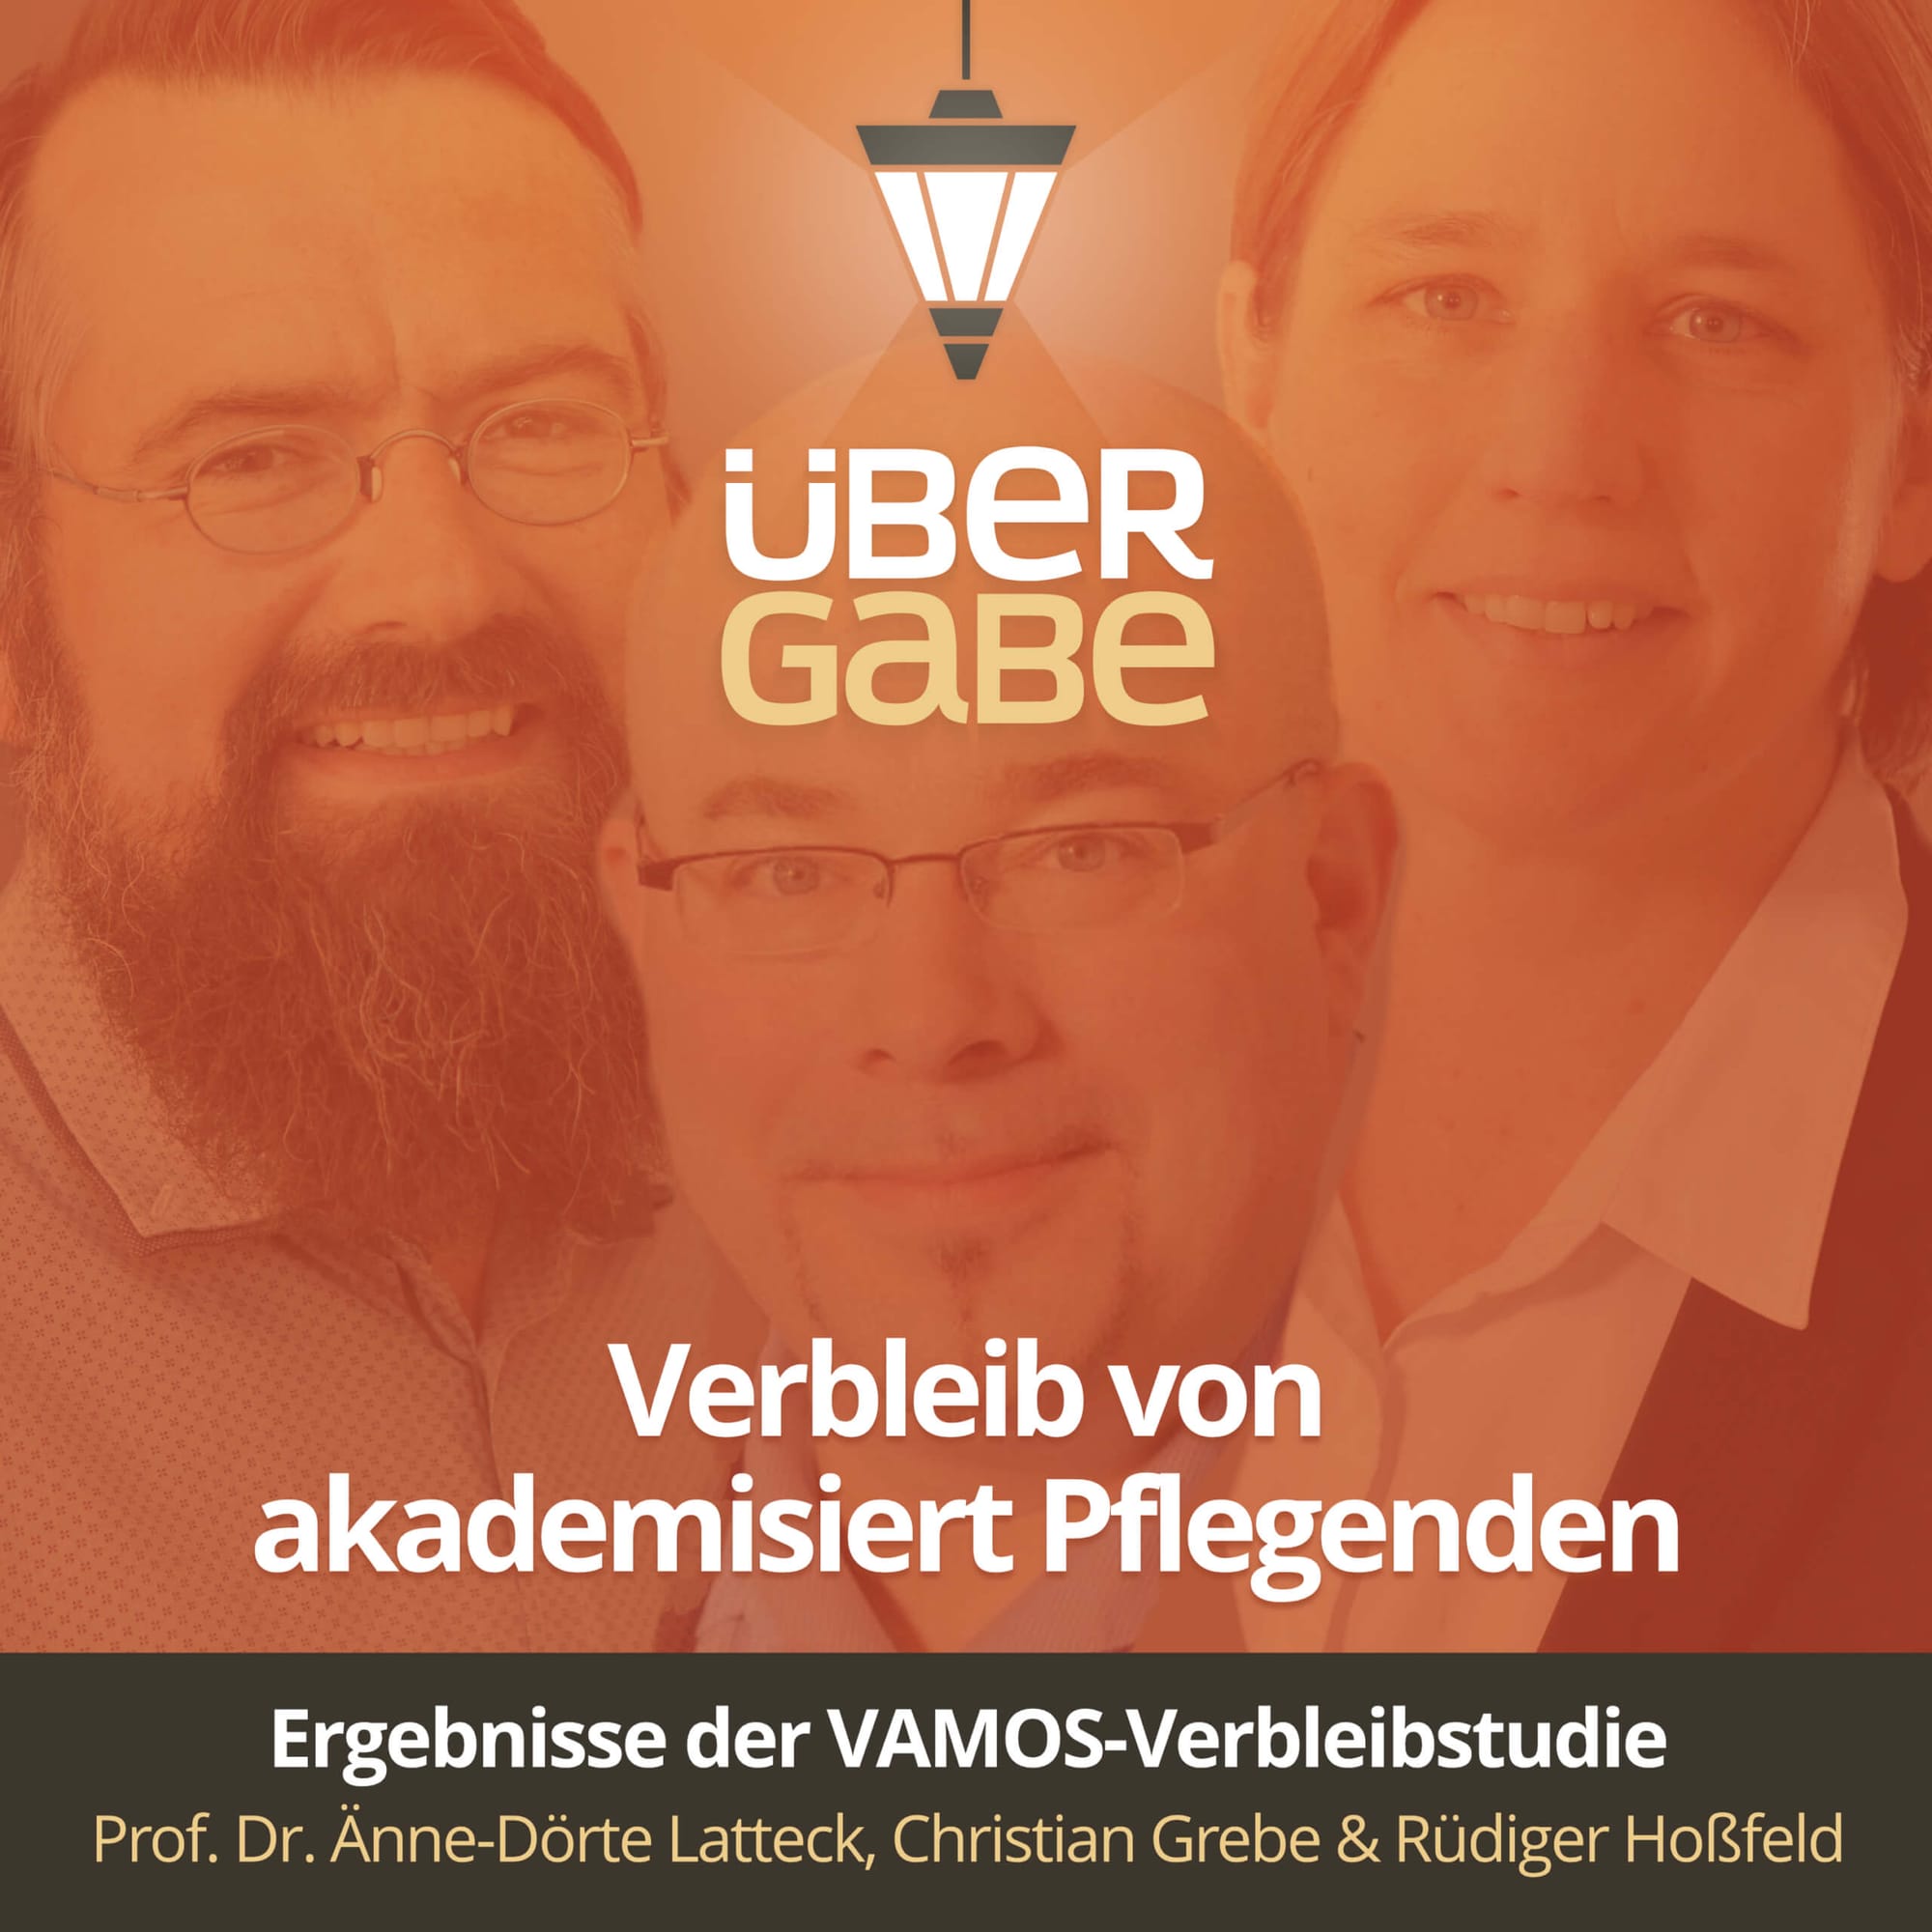 Verbleib von akademisiert Pflegenden (Prof.In Dr.In Änne-Dörte Latteck, Christian Grebe & Rüdiger Hoßfeld)